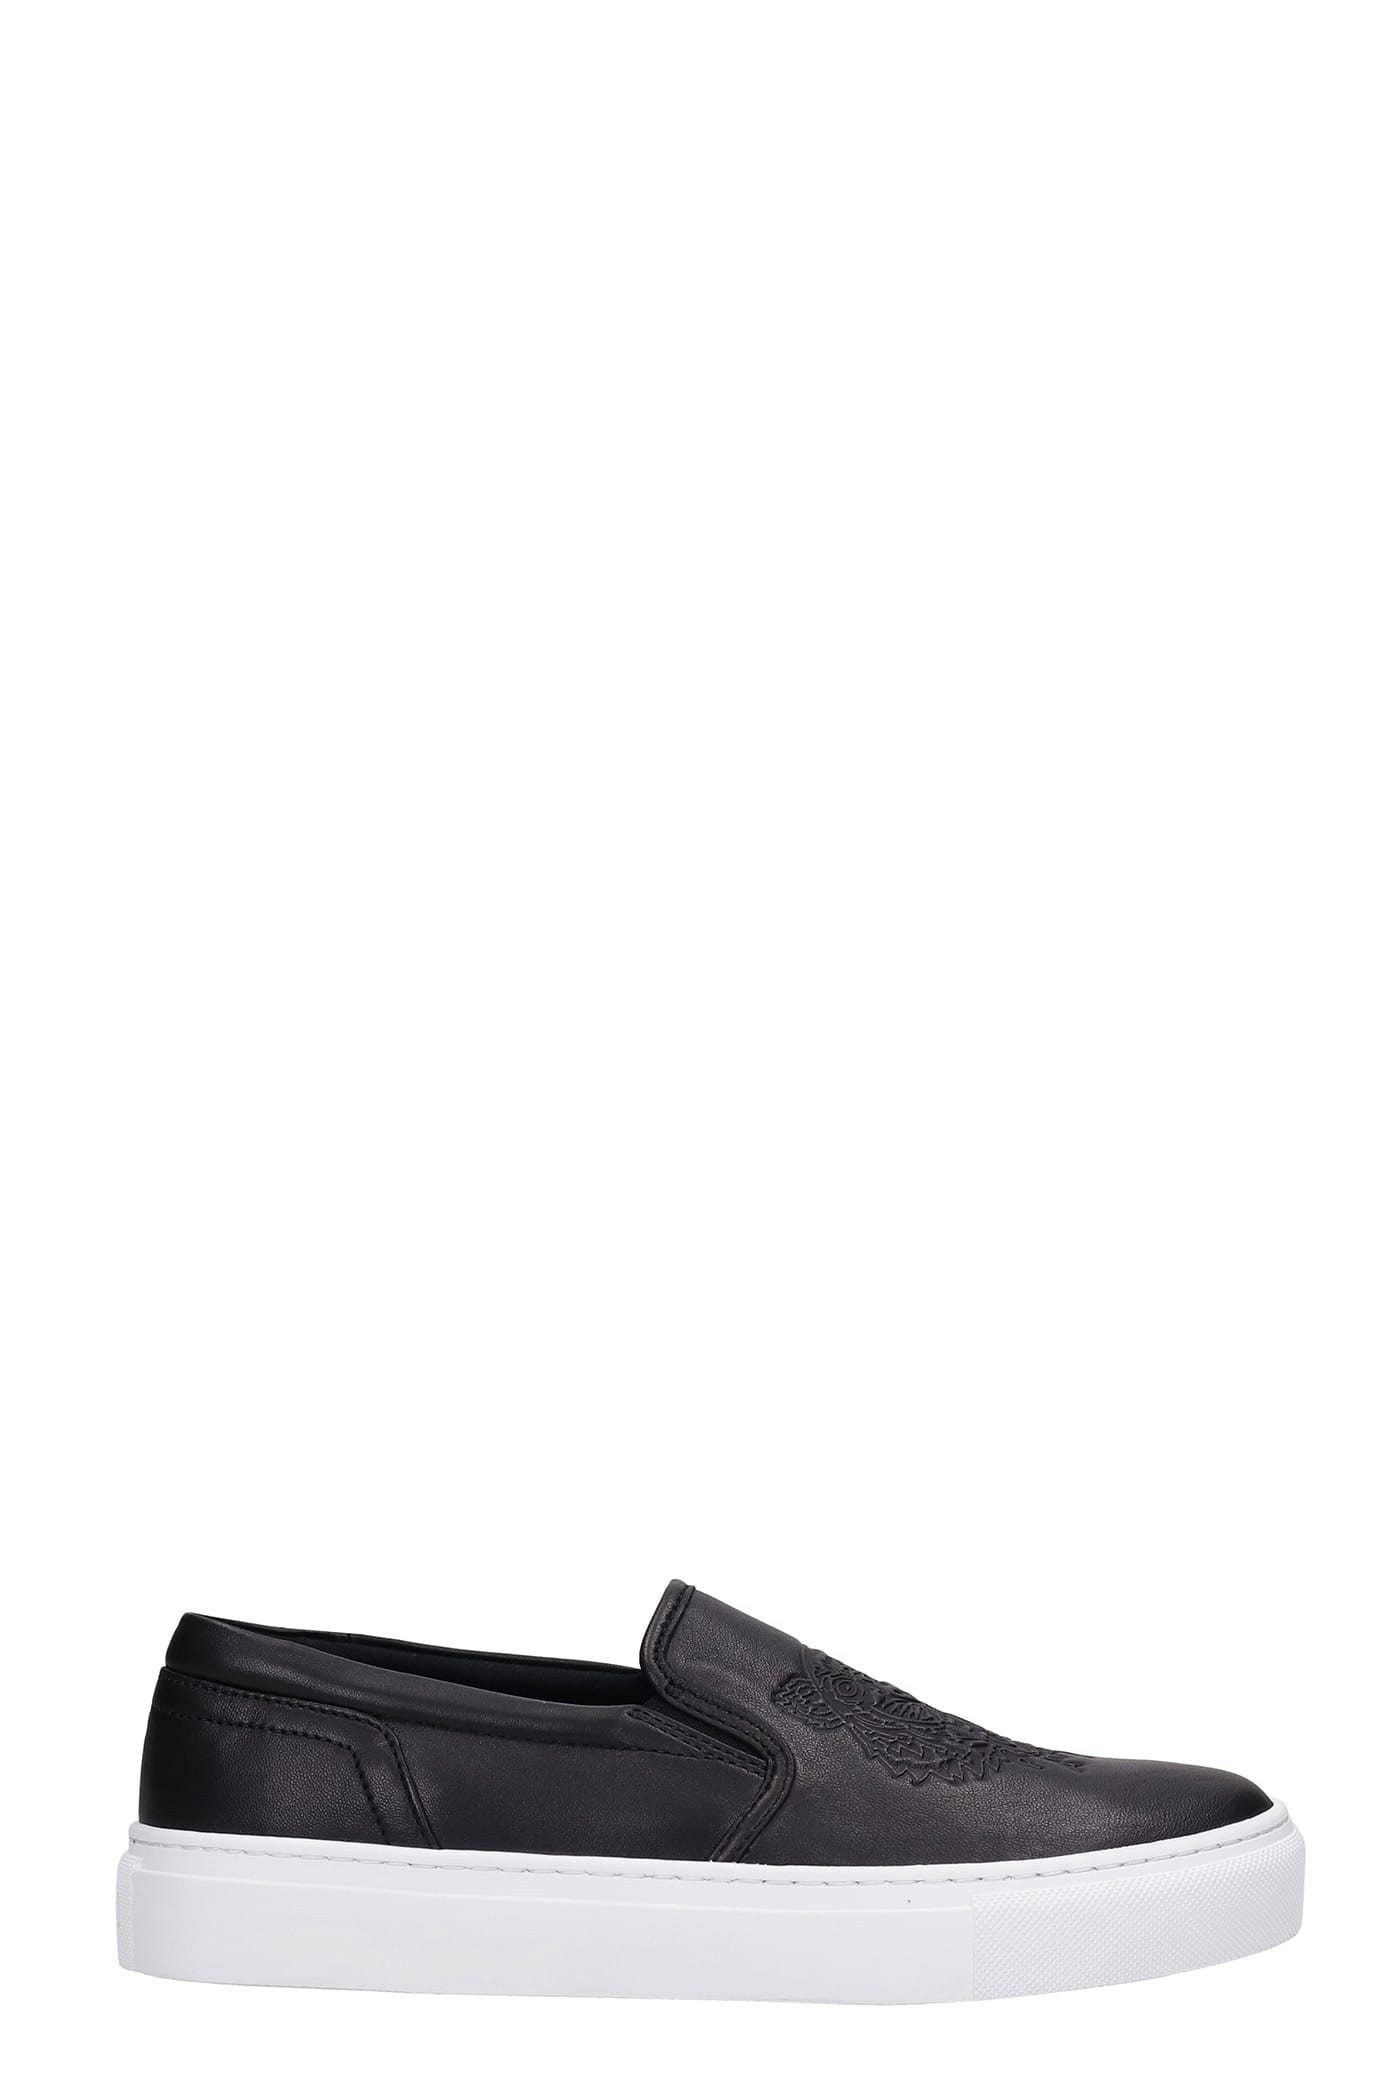 Kenzo Sneakers In Black Leather